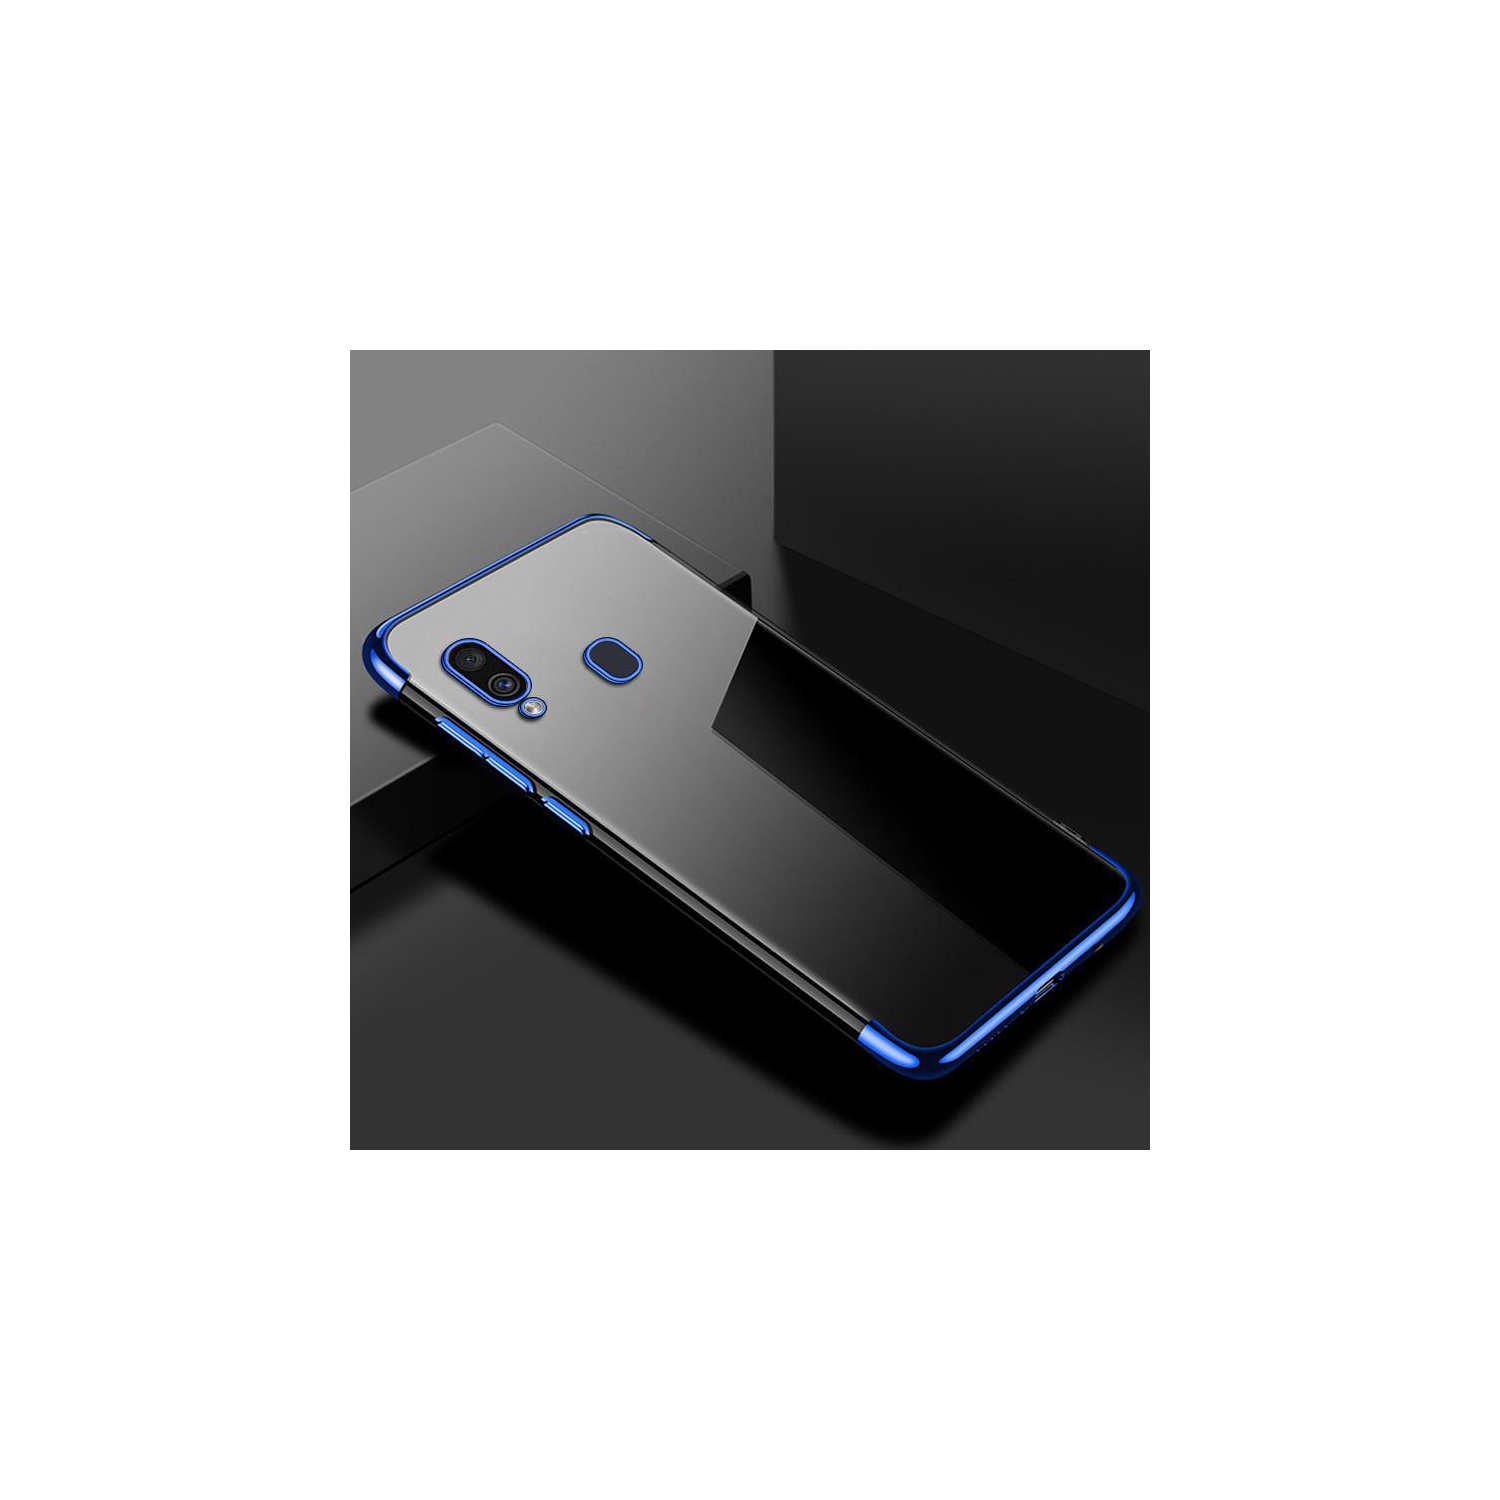 PANDACO Blue Trim Clear Case for Samsung Galaxy A20